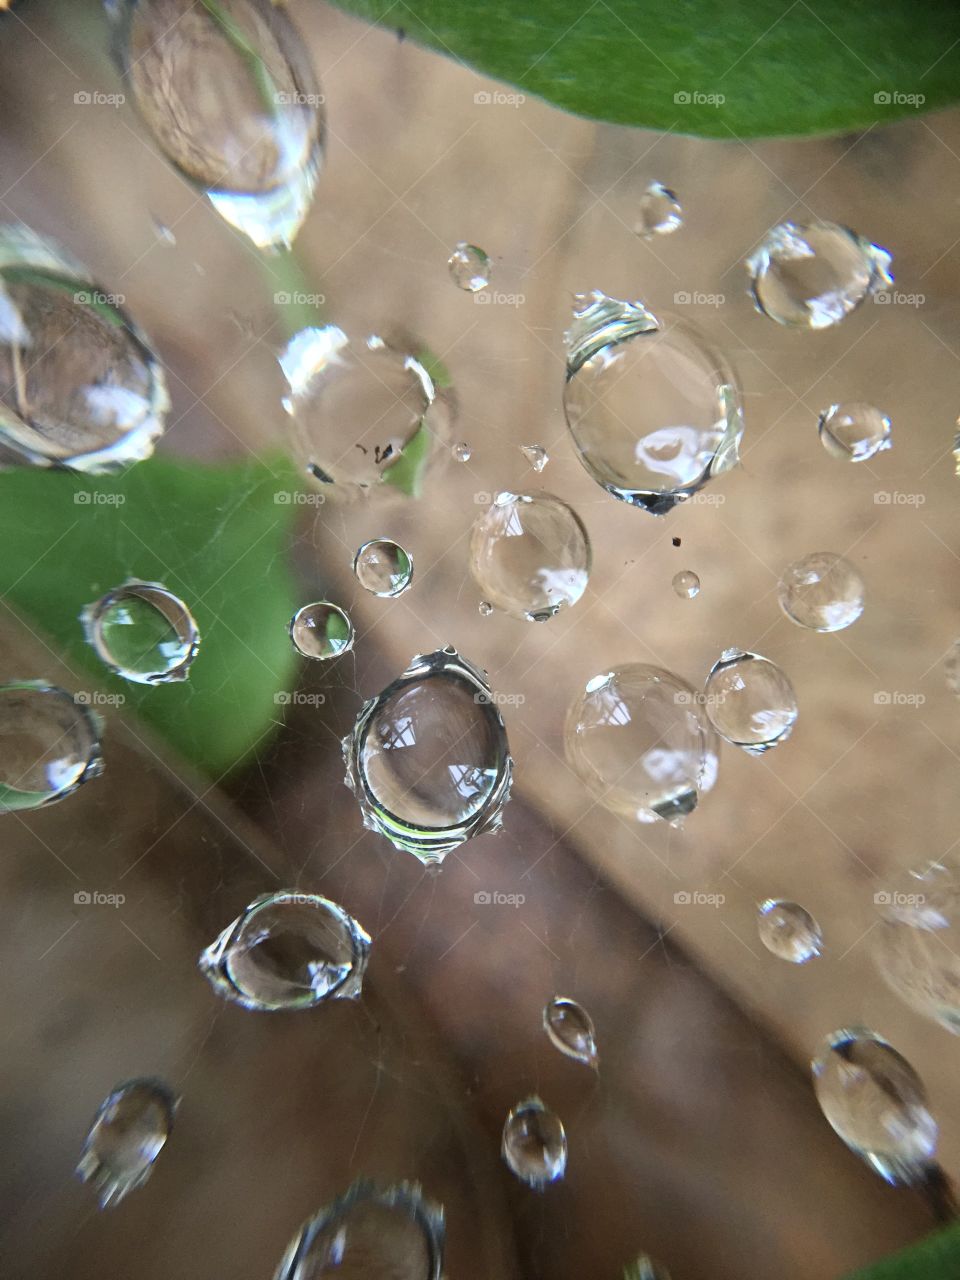 Macro dew droplets on spider web